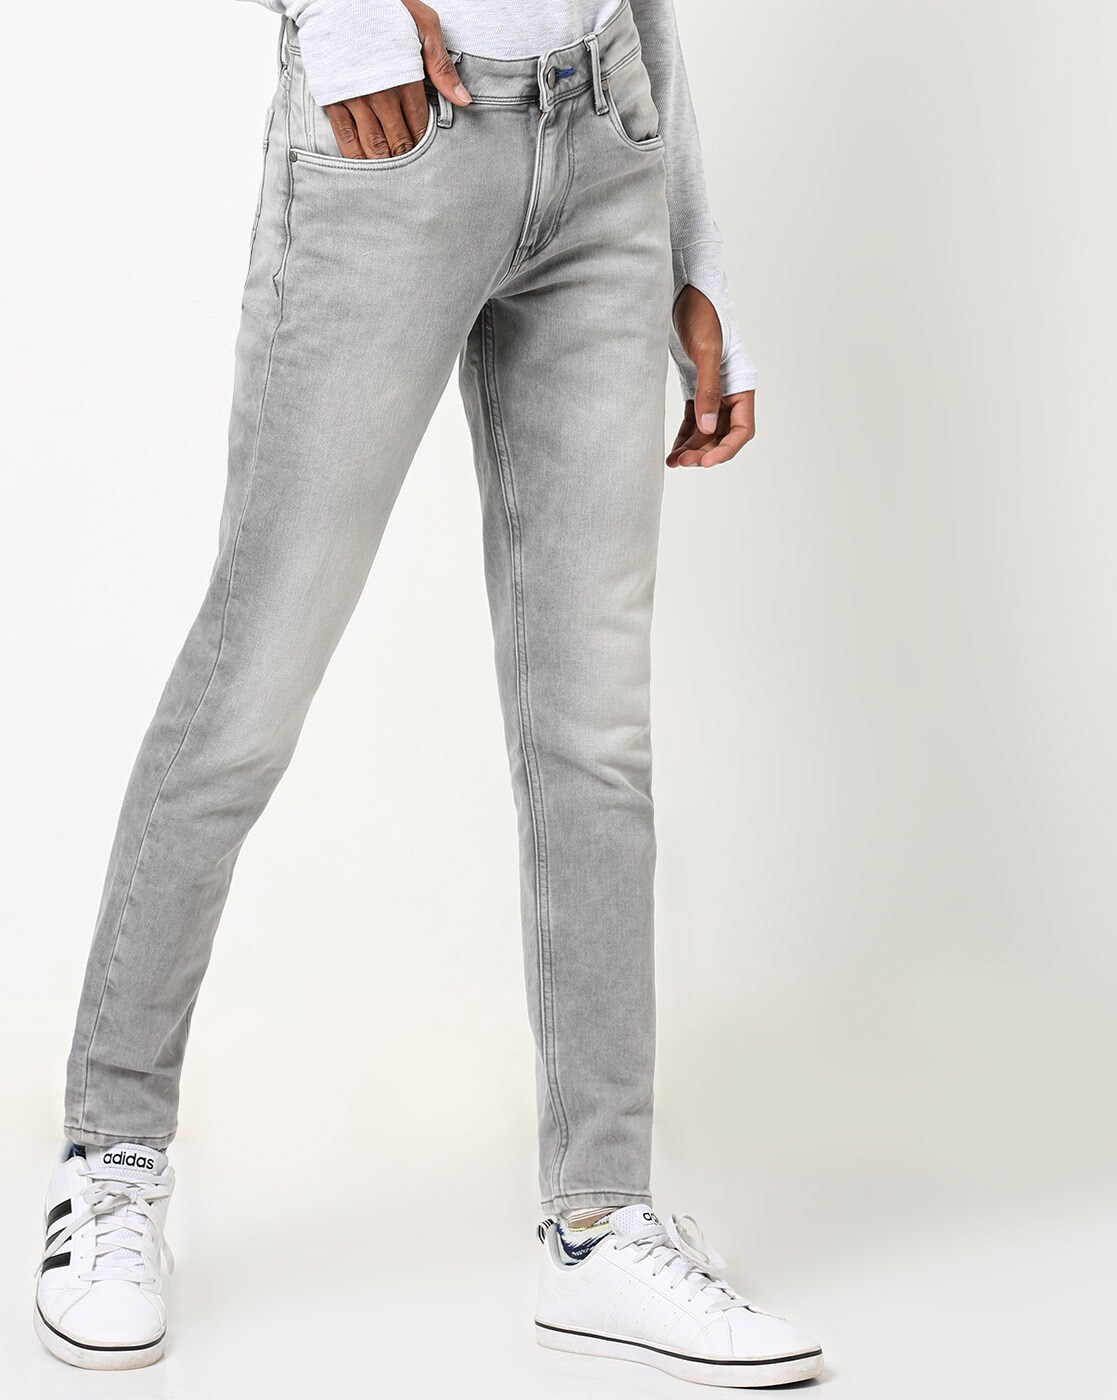 buy grey jeans